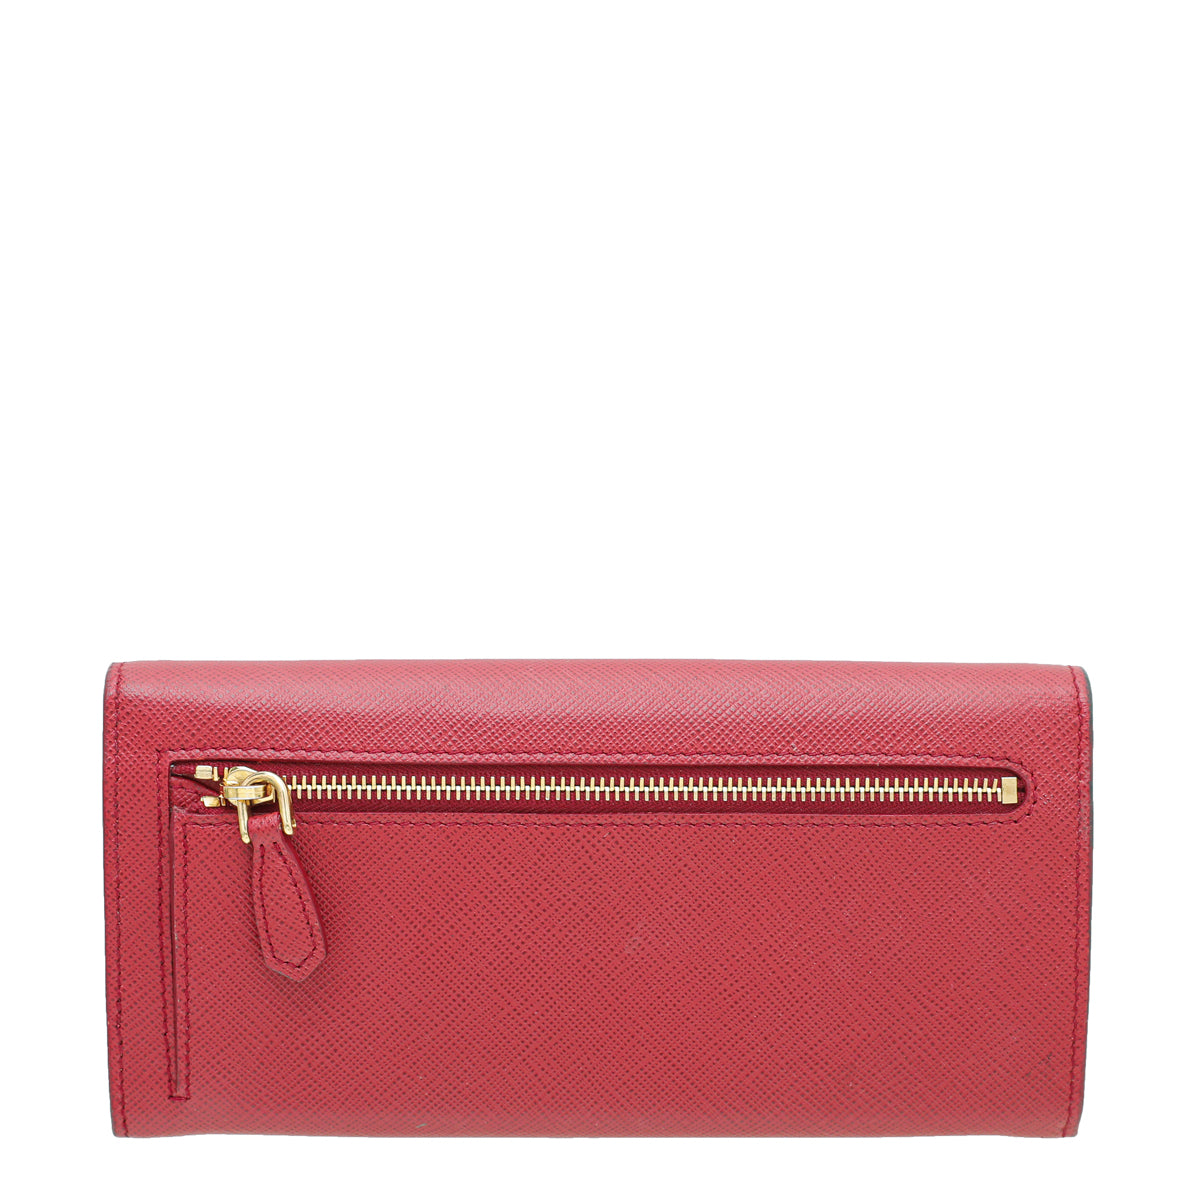 Prada Red Saffiano Monochrome Flap Long Wallet